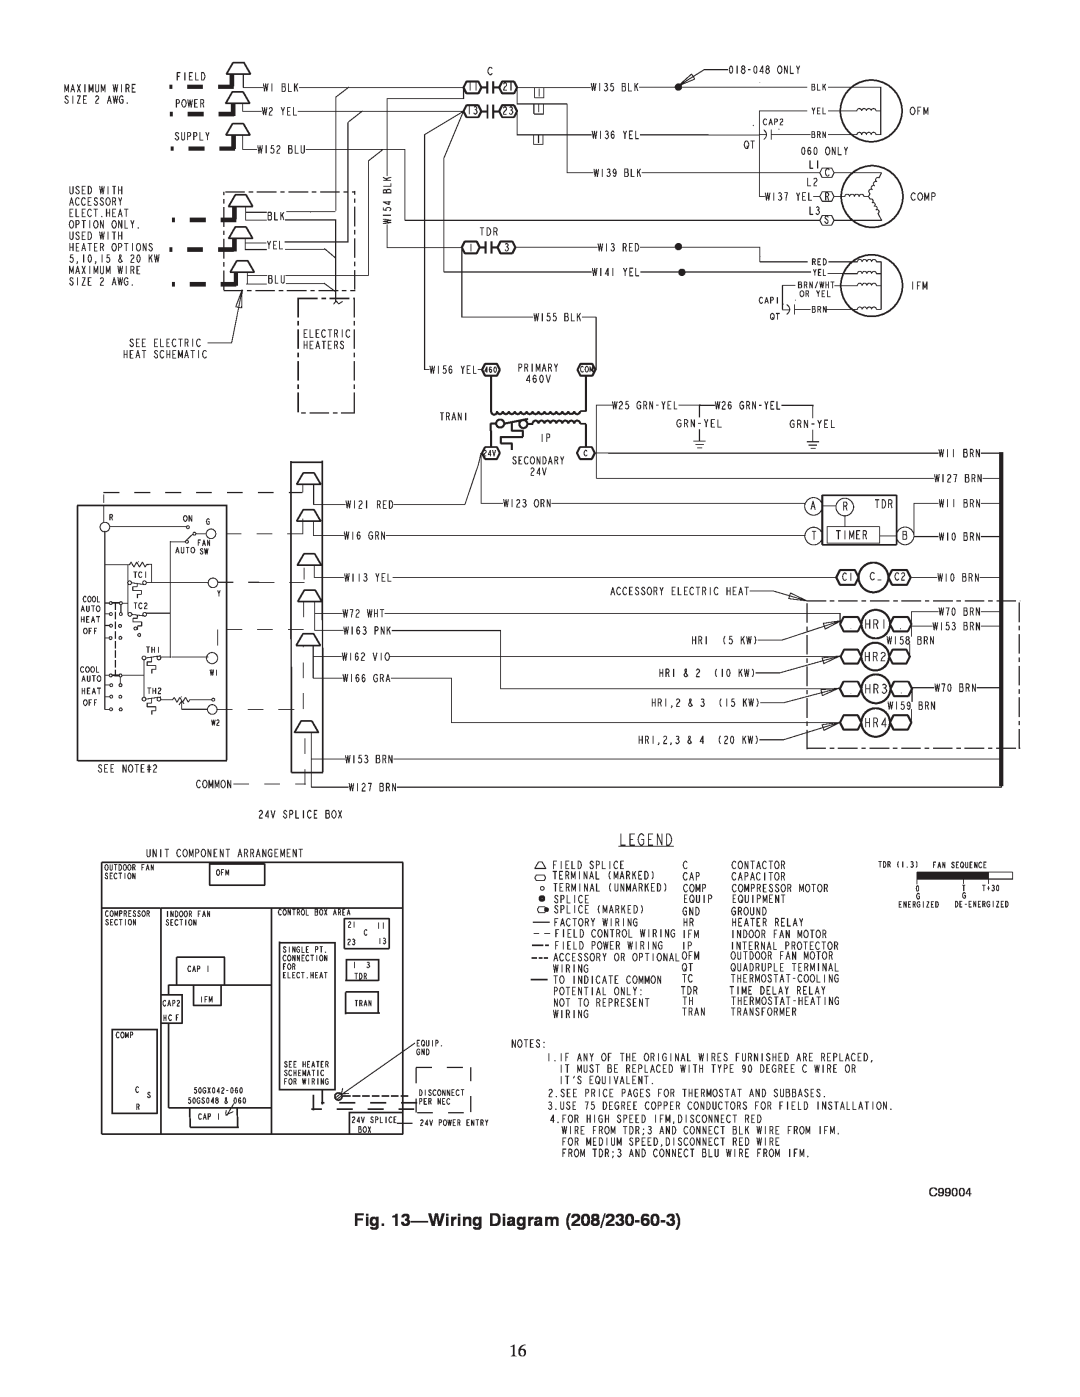 Carrier 50GS, 50GX instruction manual WiringDiagram 208/230-60-3, C99004 